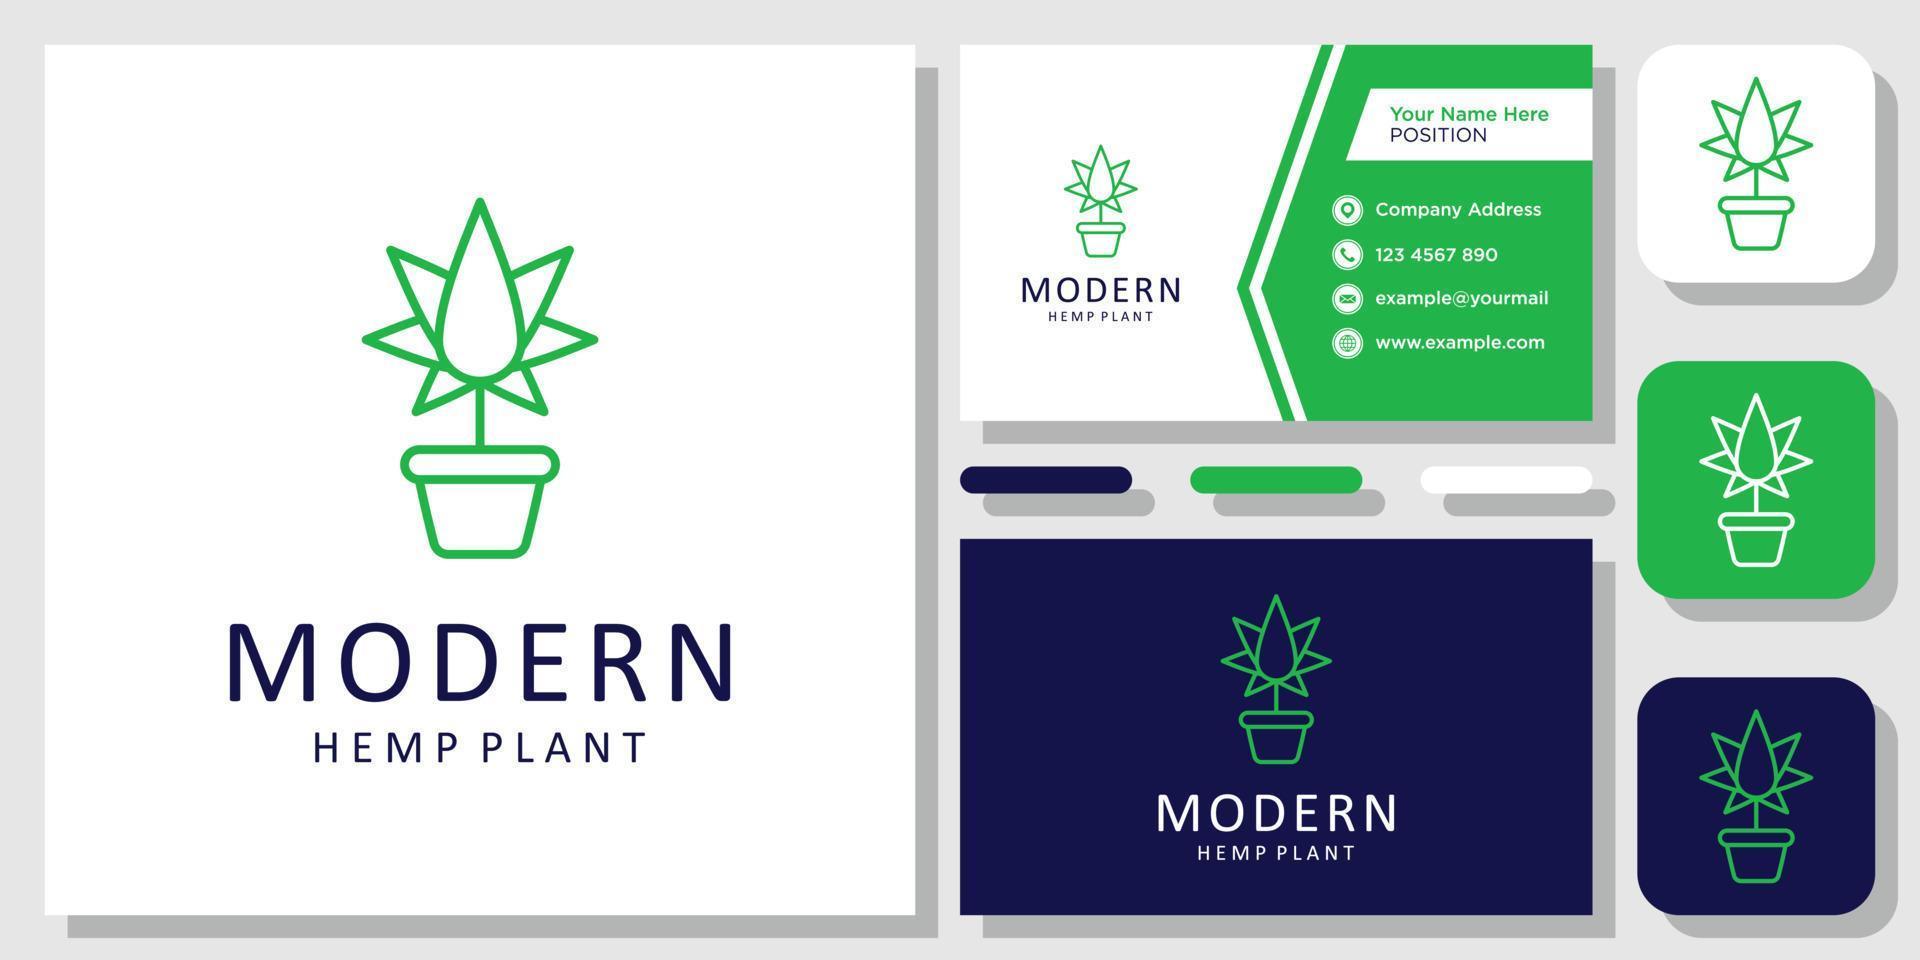 Pot Hemp Plant Cannabis Drug Organic Leaf Grass logo design inspiration with Layout Template Business Card vector